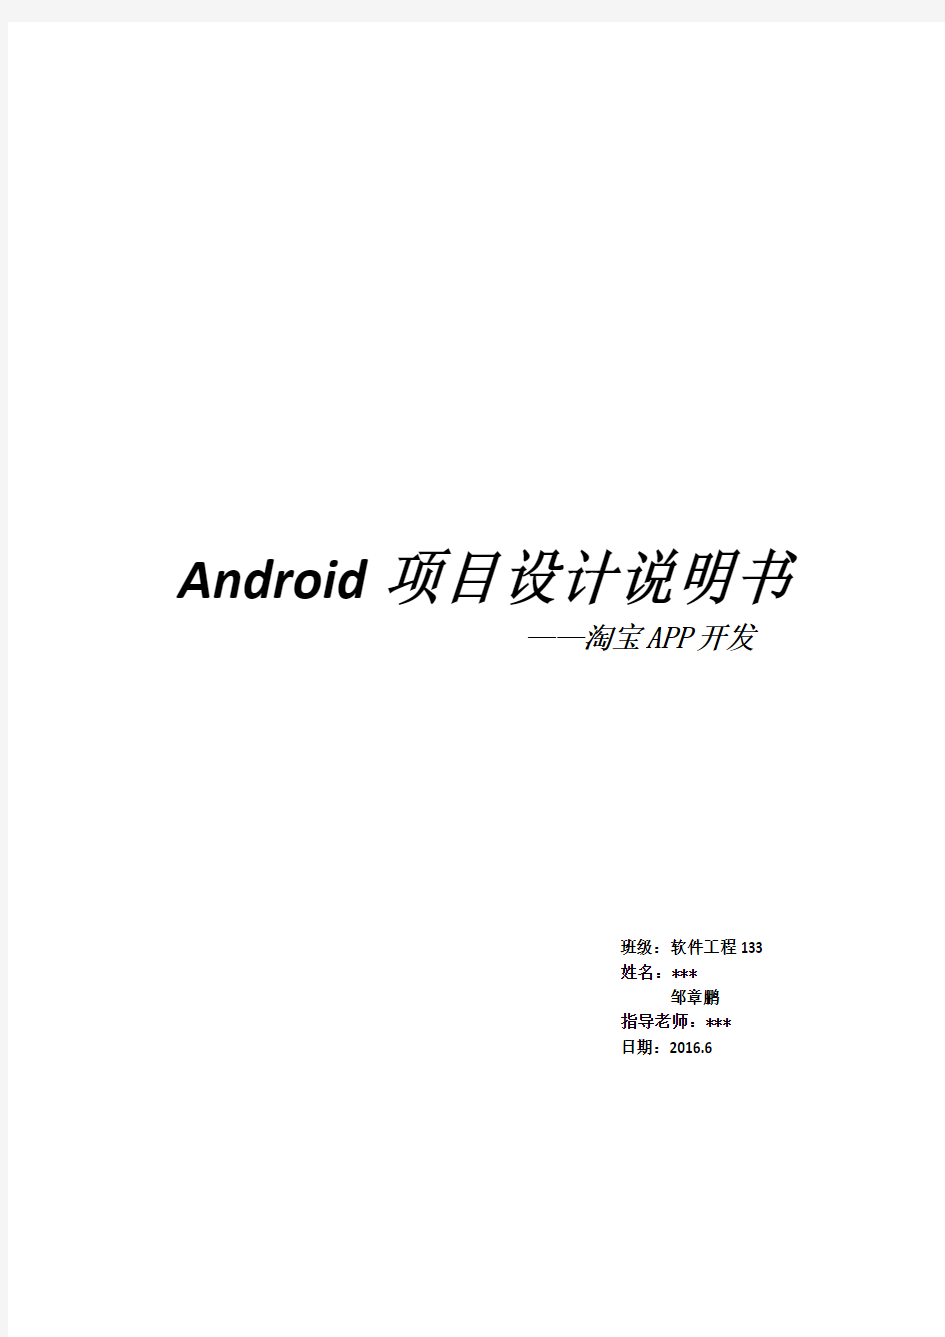 Android项目设计说明书